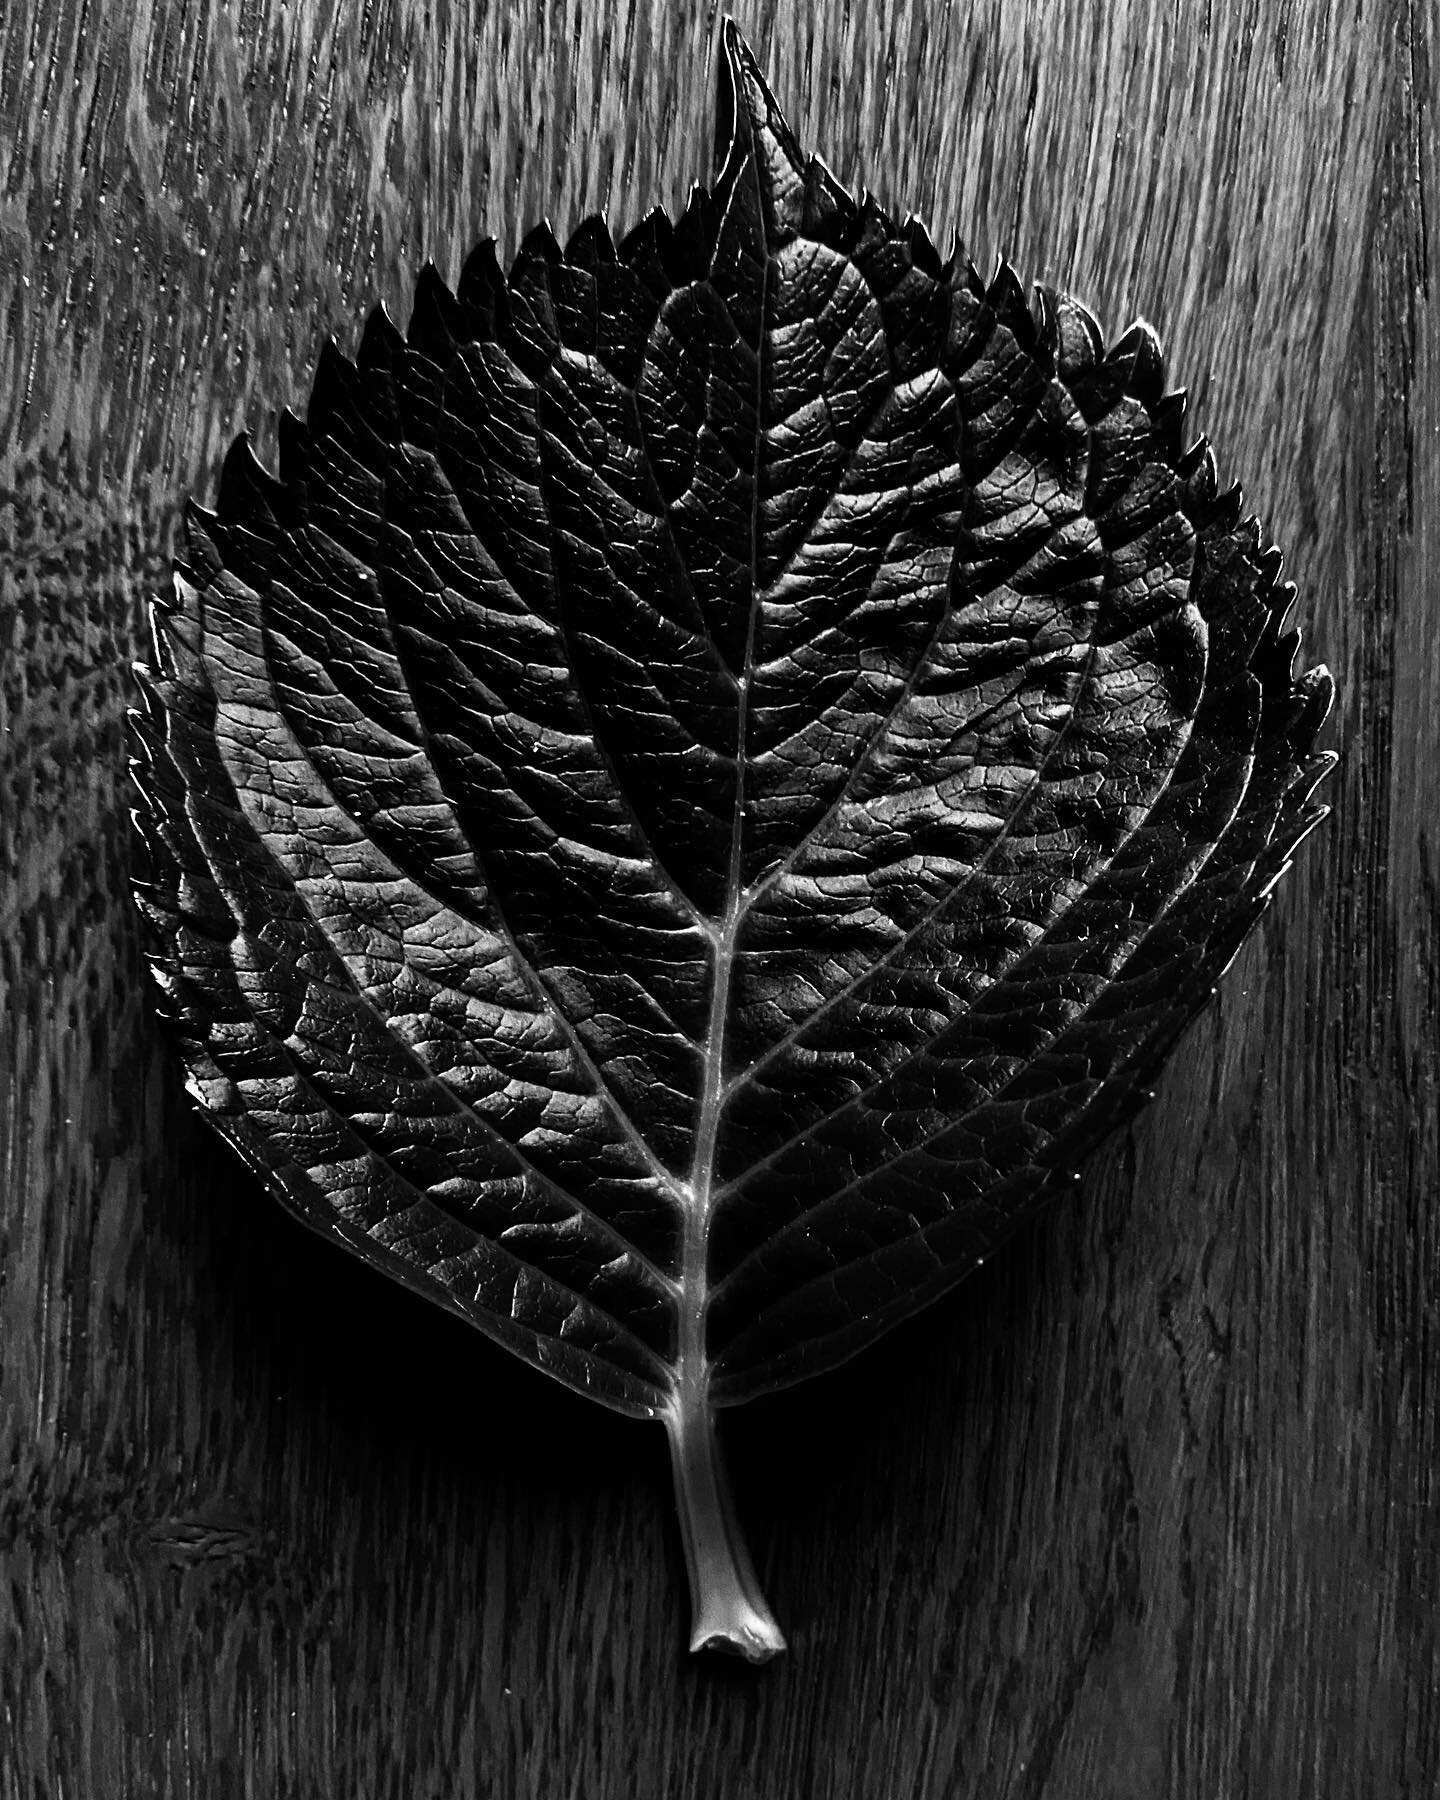 the beauty of nature&hellip;
.
.
.
.
#nature #blackandwhitephotography #blackandwhite #leaf #plant #close #photography #photo #photographer #editorial #editorialphotography #details